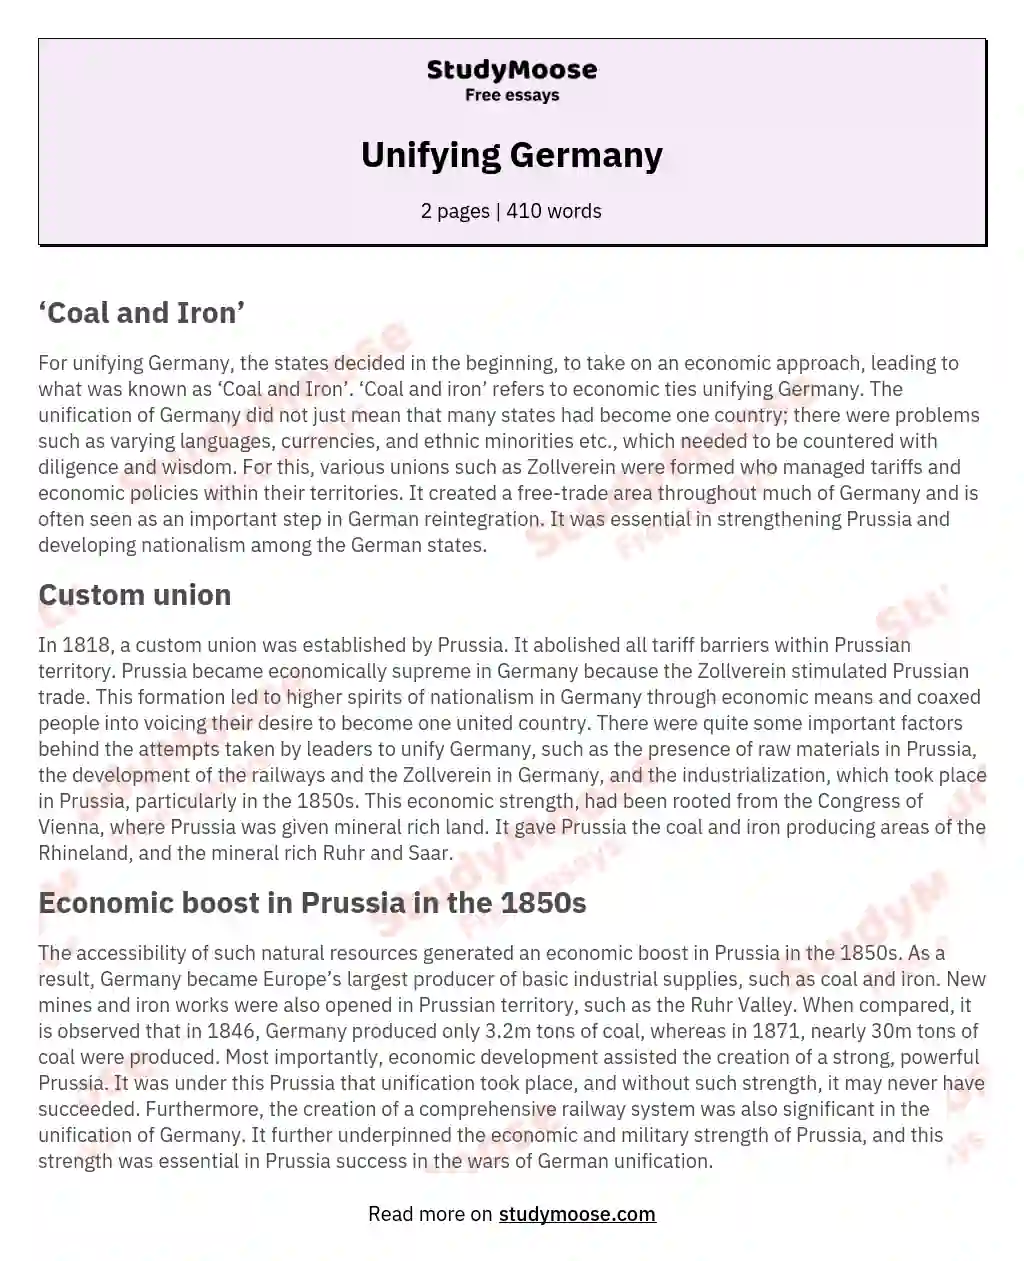 Unifying Germany essay